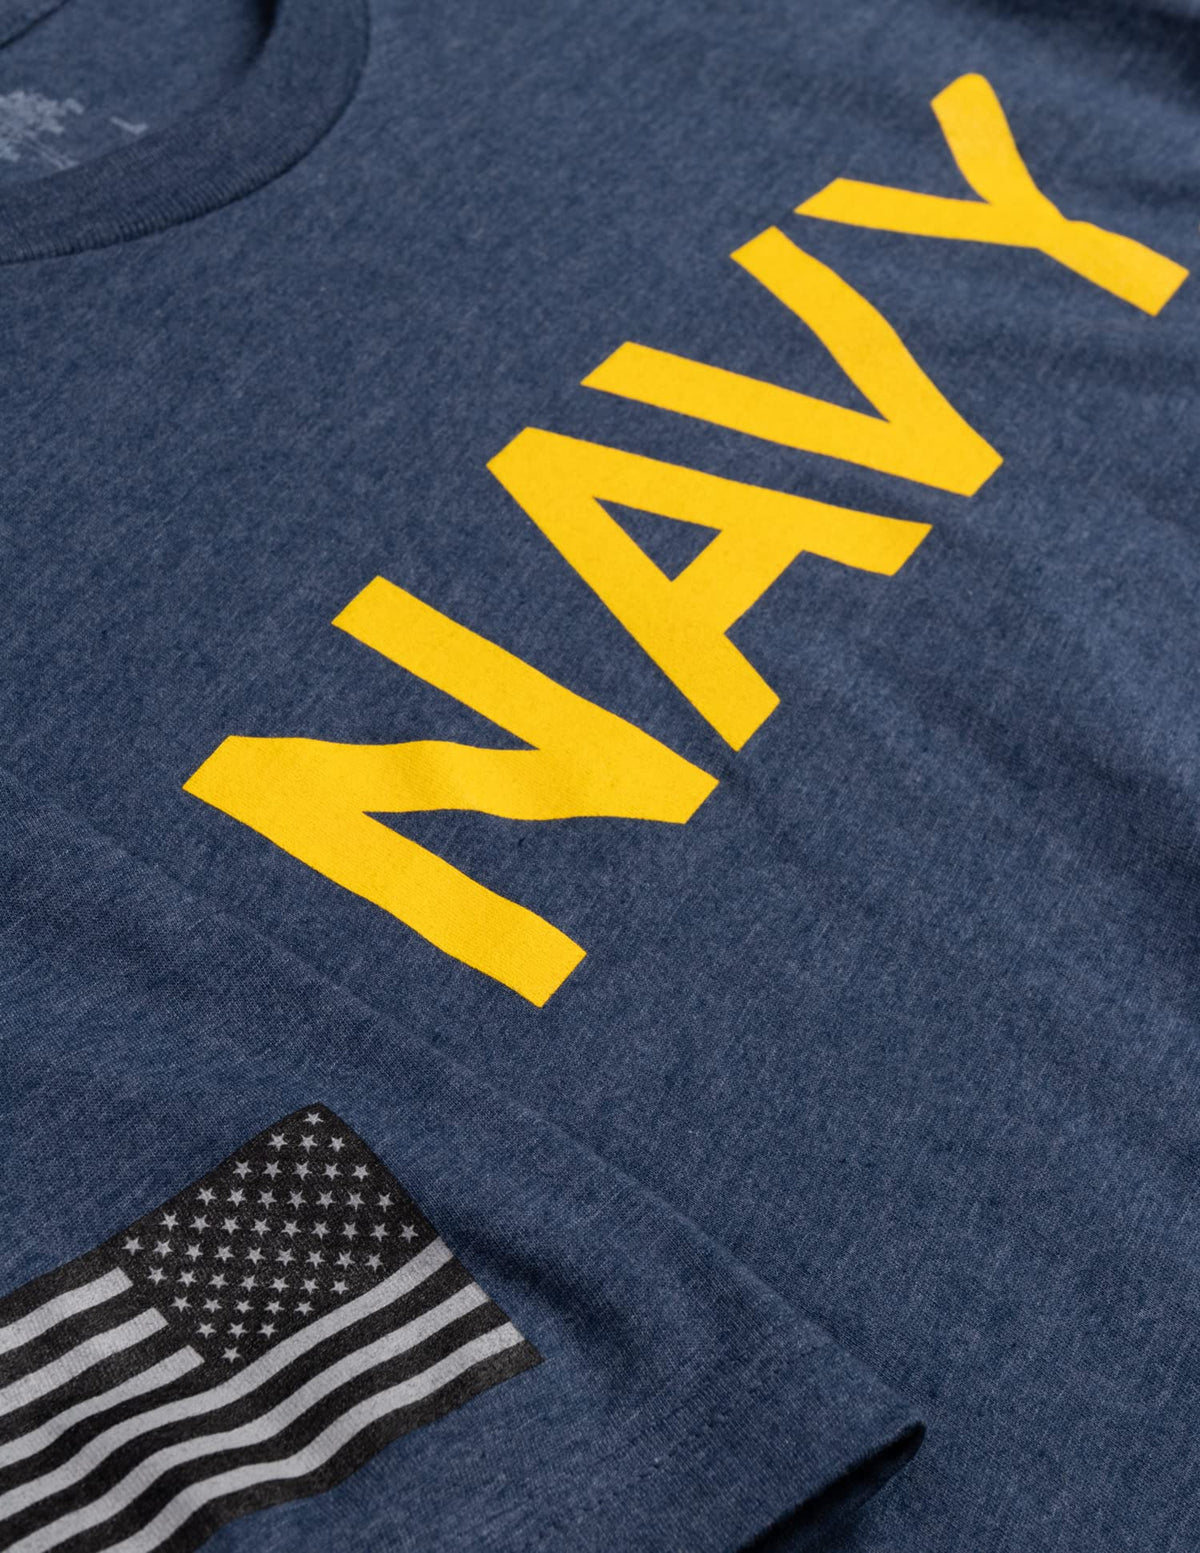 USS Sentry, MCM-3 | U.S. Navy Sailor Veteran USN United States Naval T-shirt for Men Women